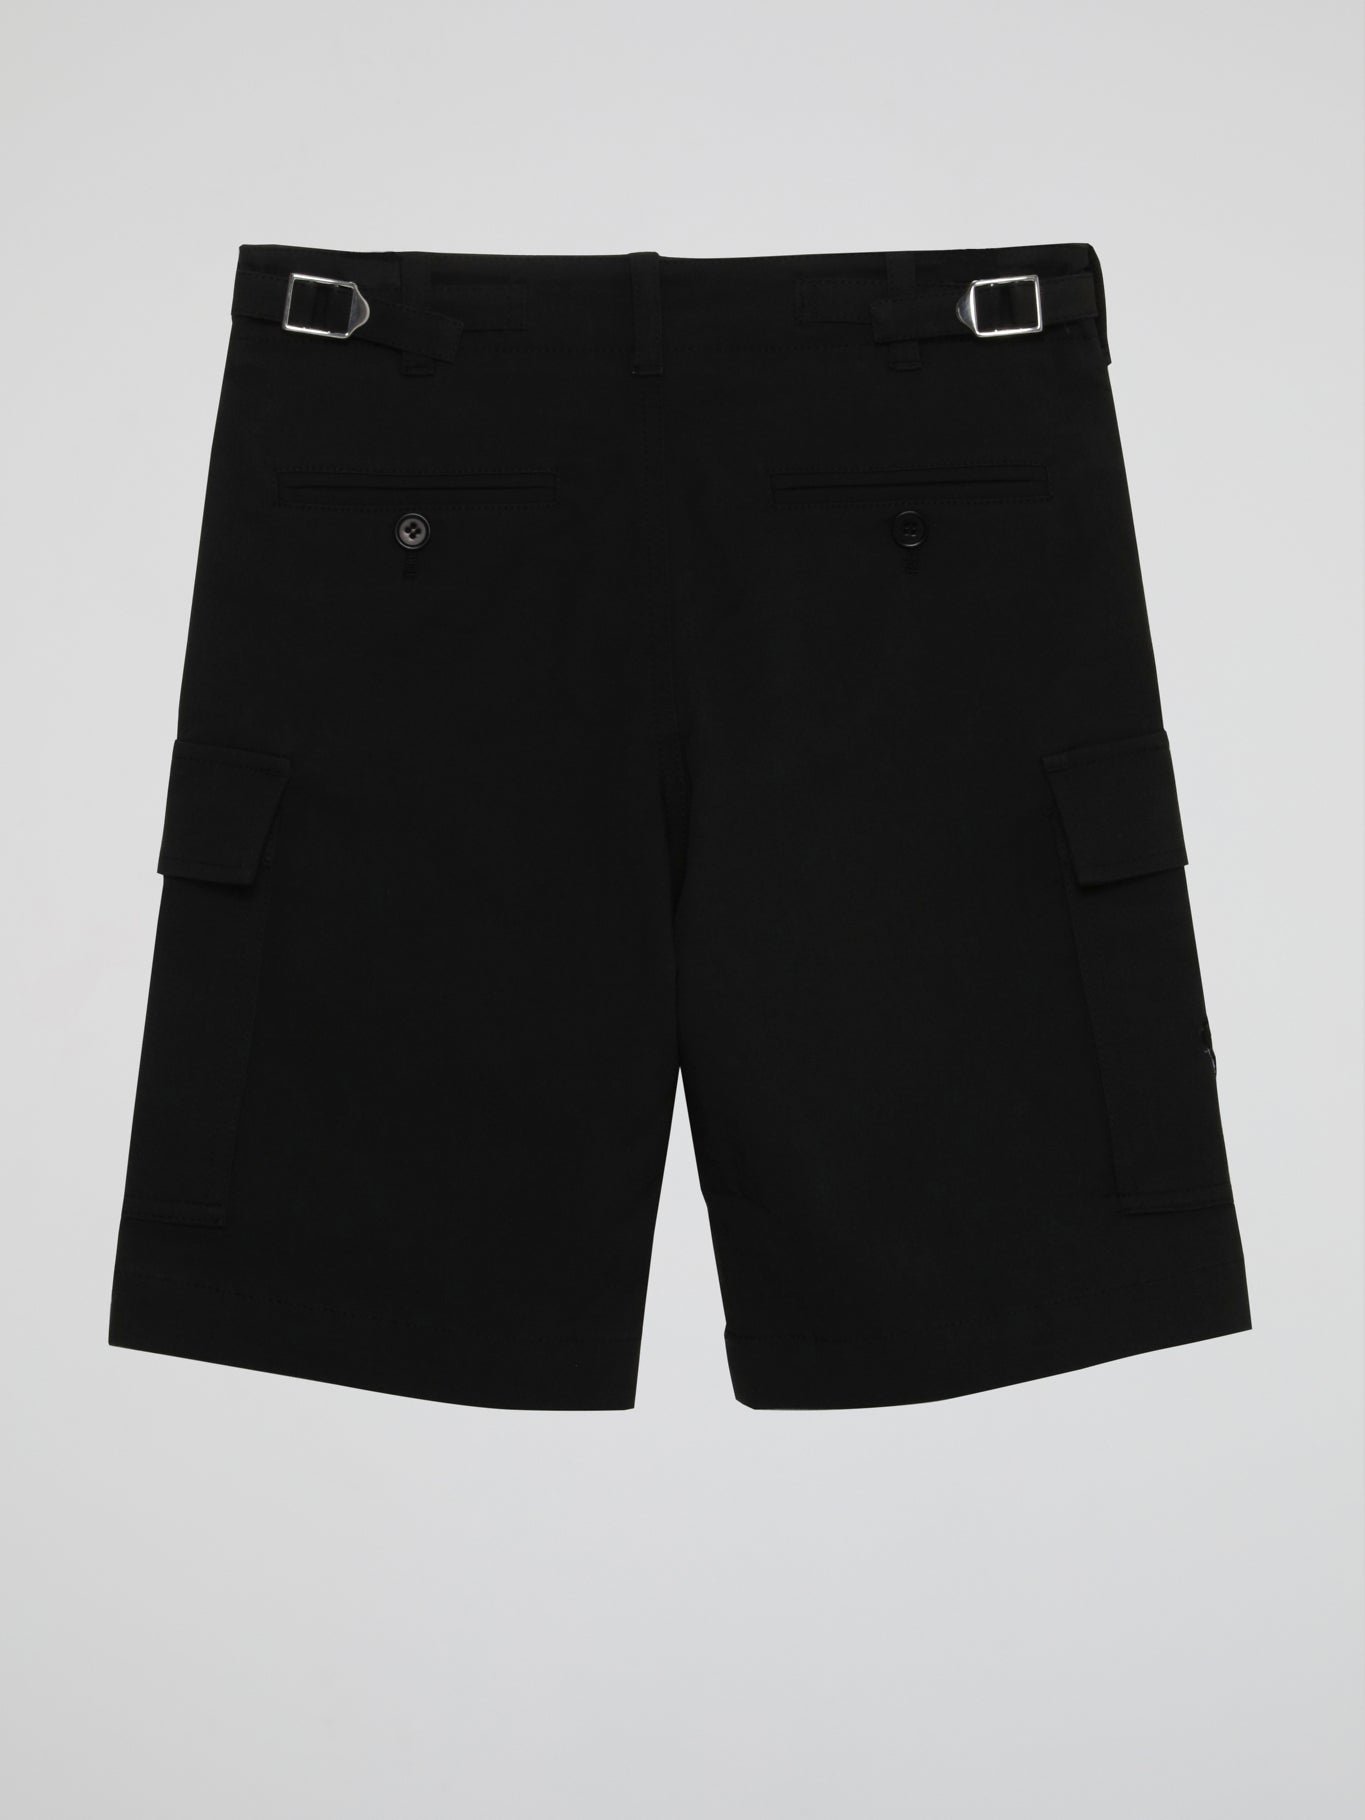 Black Cargo Shorts (Kids)